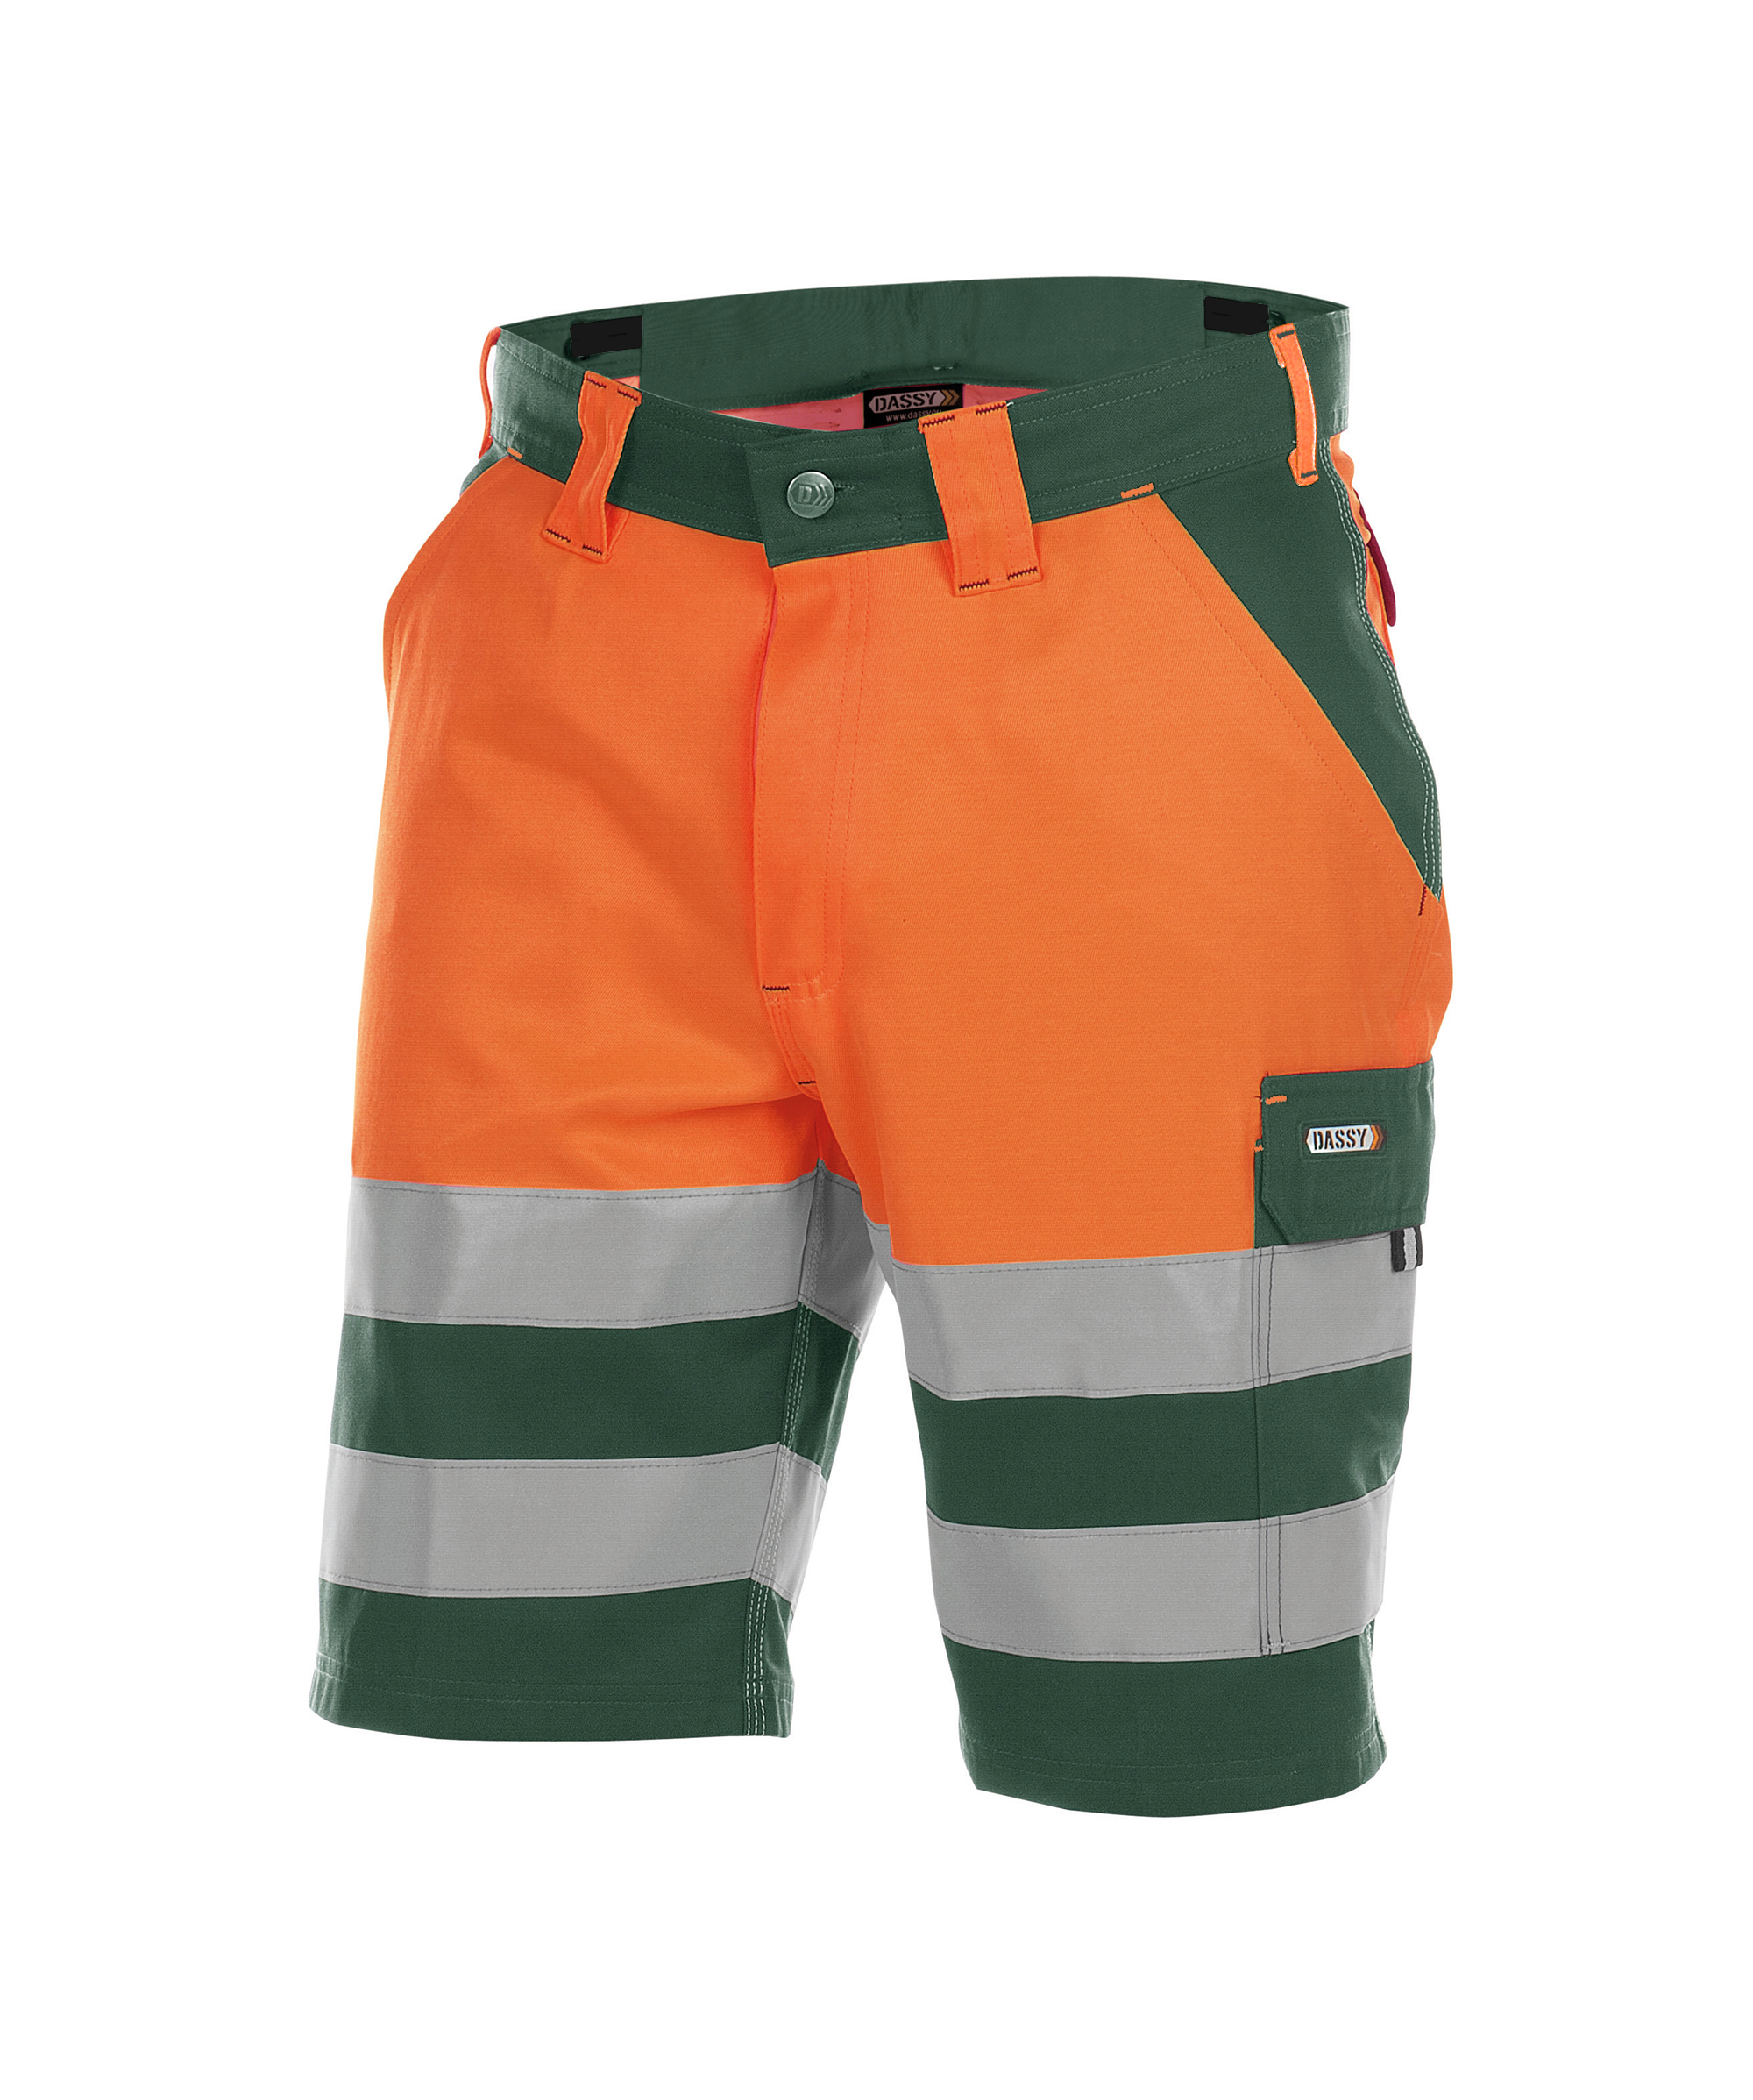 venna_high-visibility-work-shorts_bottle-green-fluo-orange_front.jpg